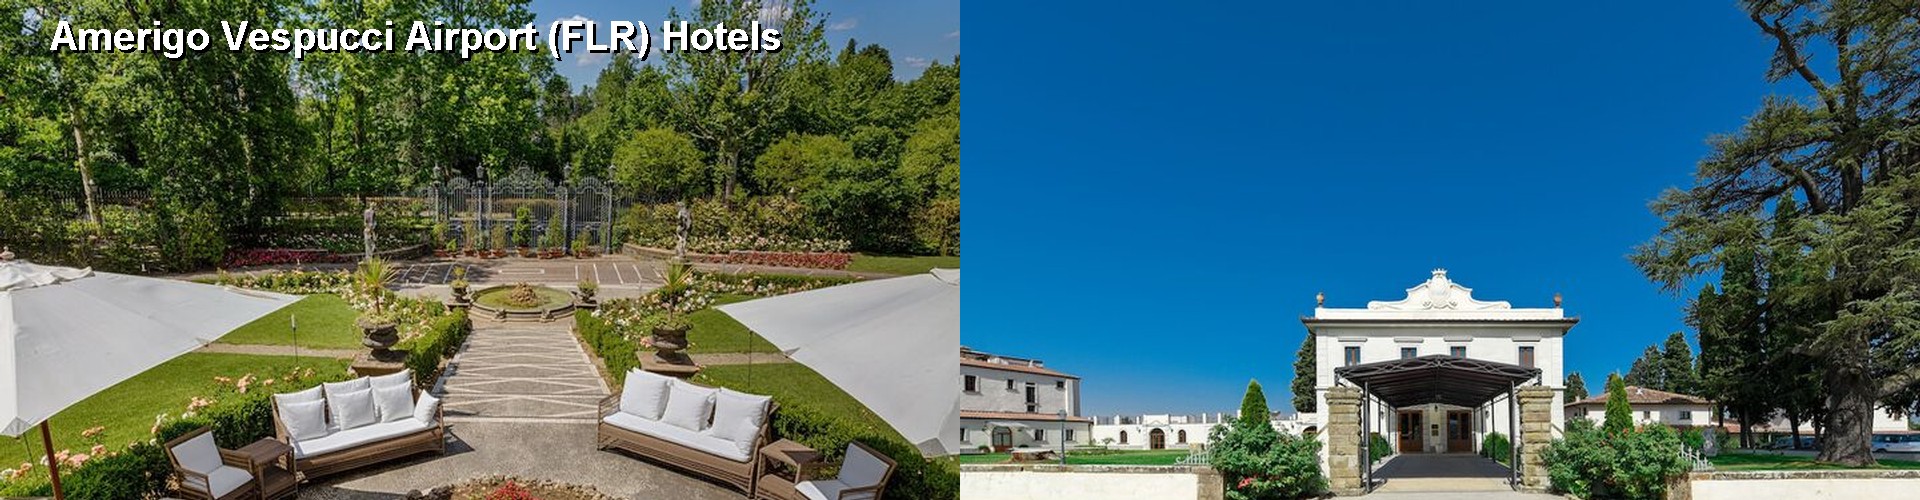 4 Best Hotels near Amerigo Vespucci Airport (FLR)